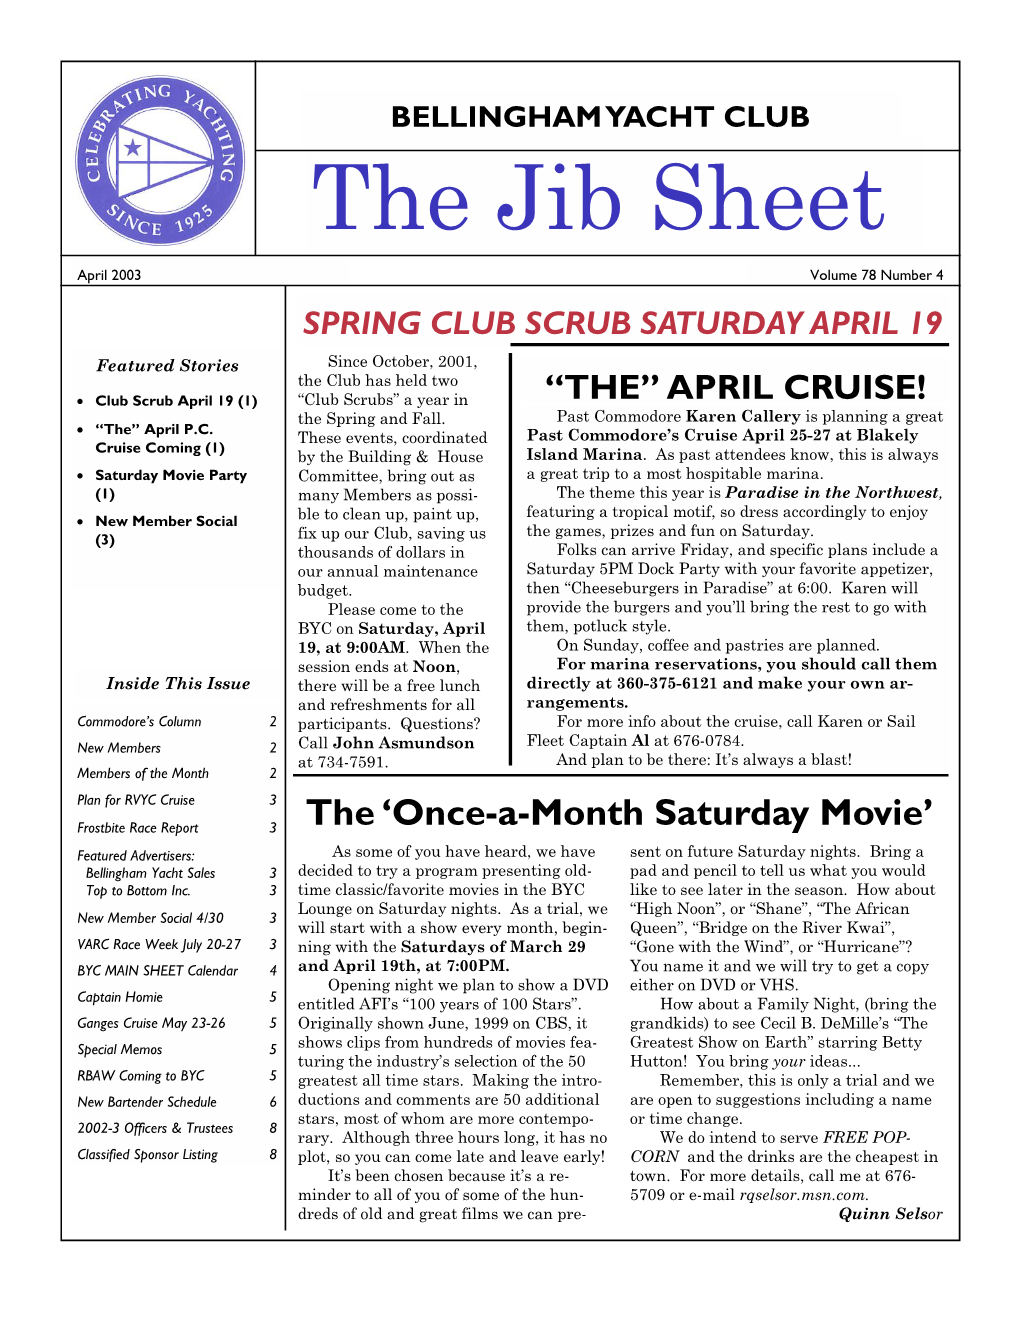 The Jib Sheet